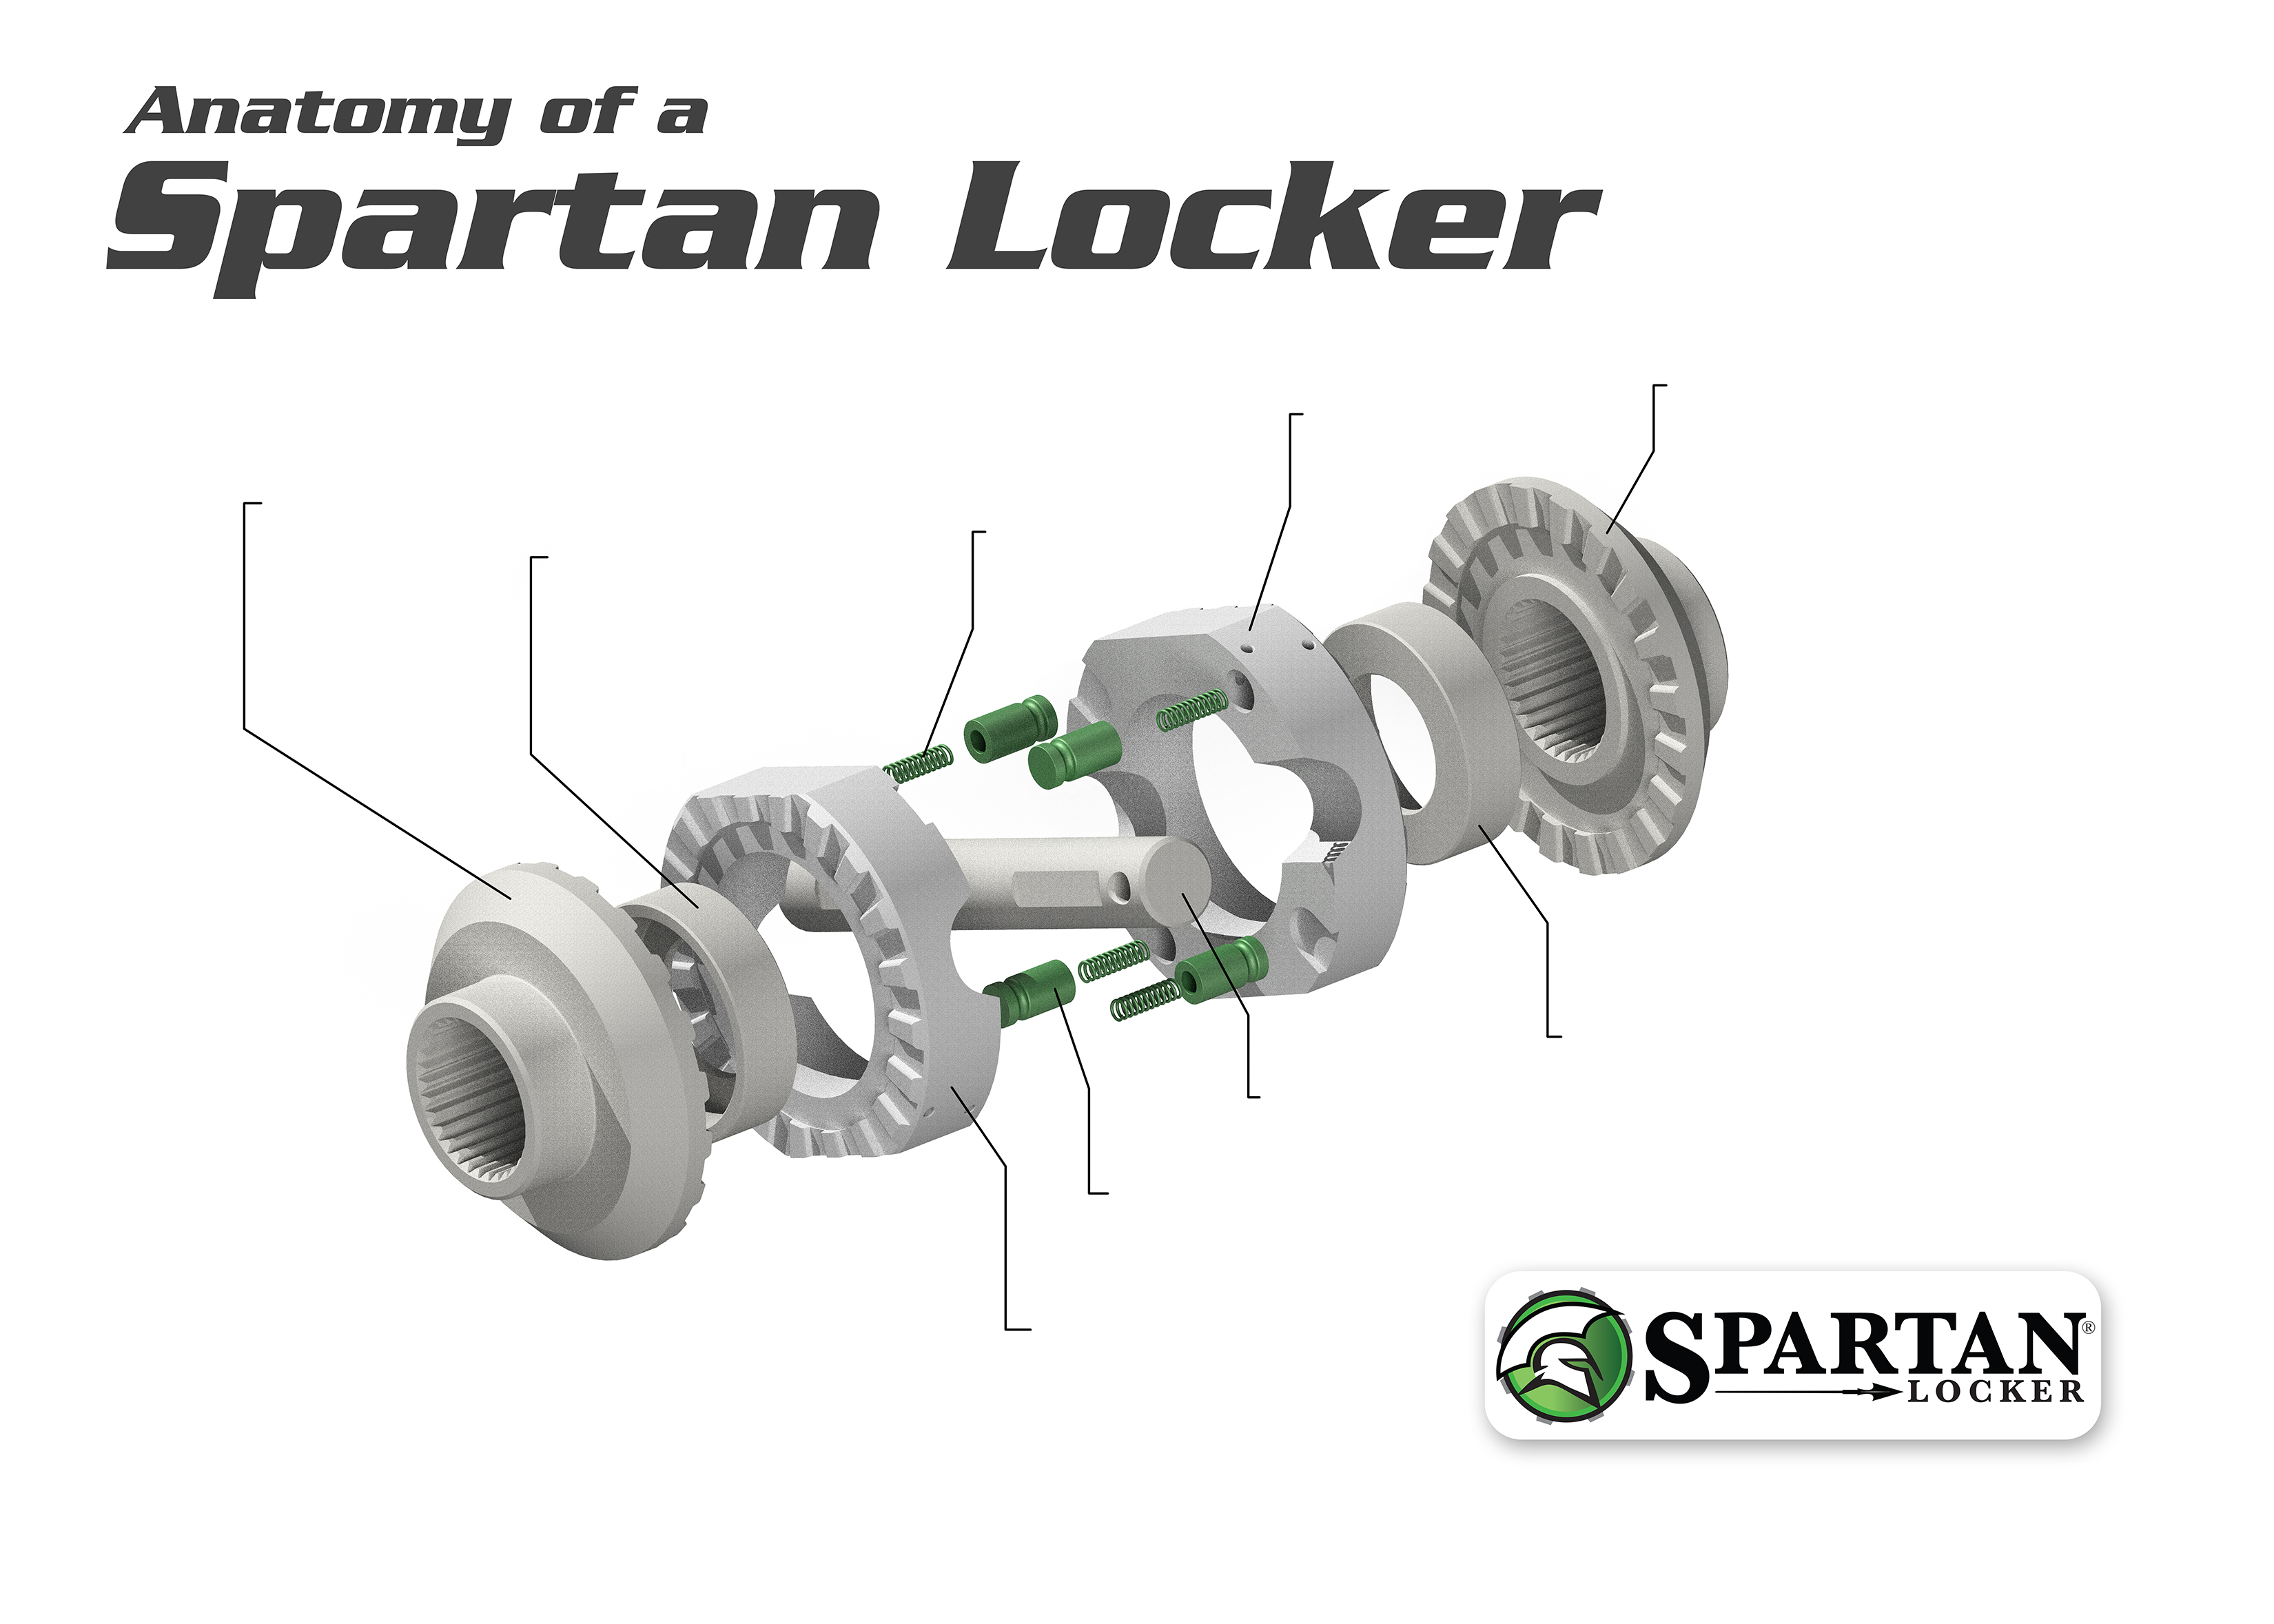 Spartan Locker for Dana 30 differential with 27 spline axles